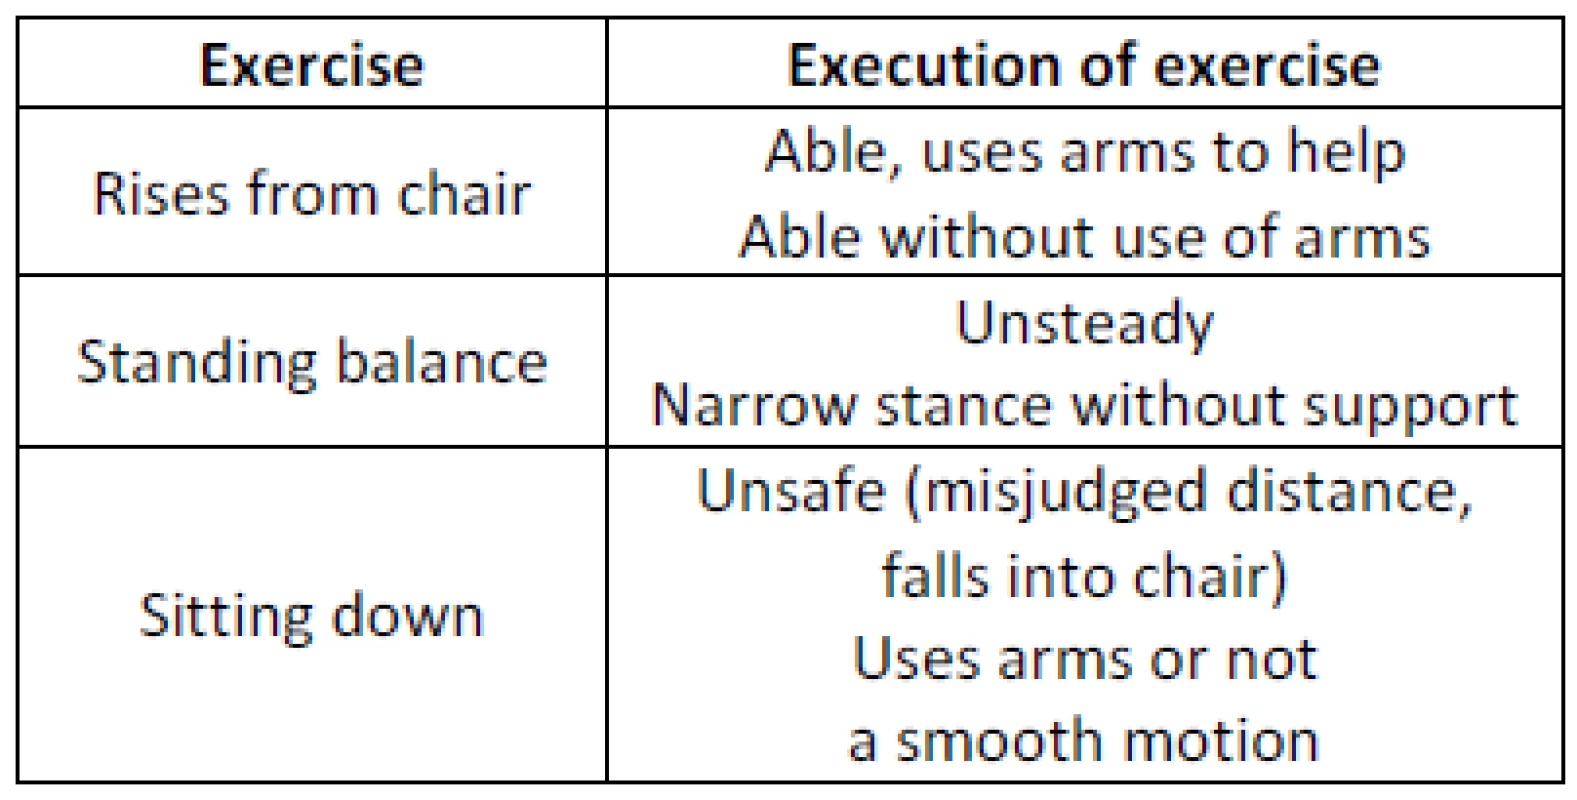 Selected exercises from Tinneti balance assessment tool [12].